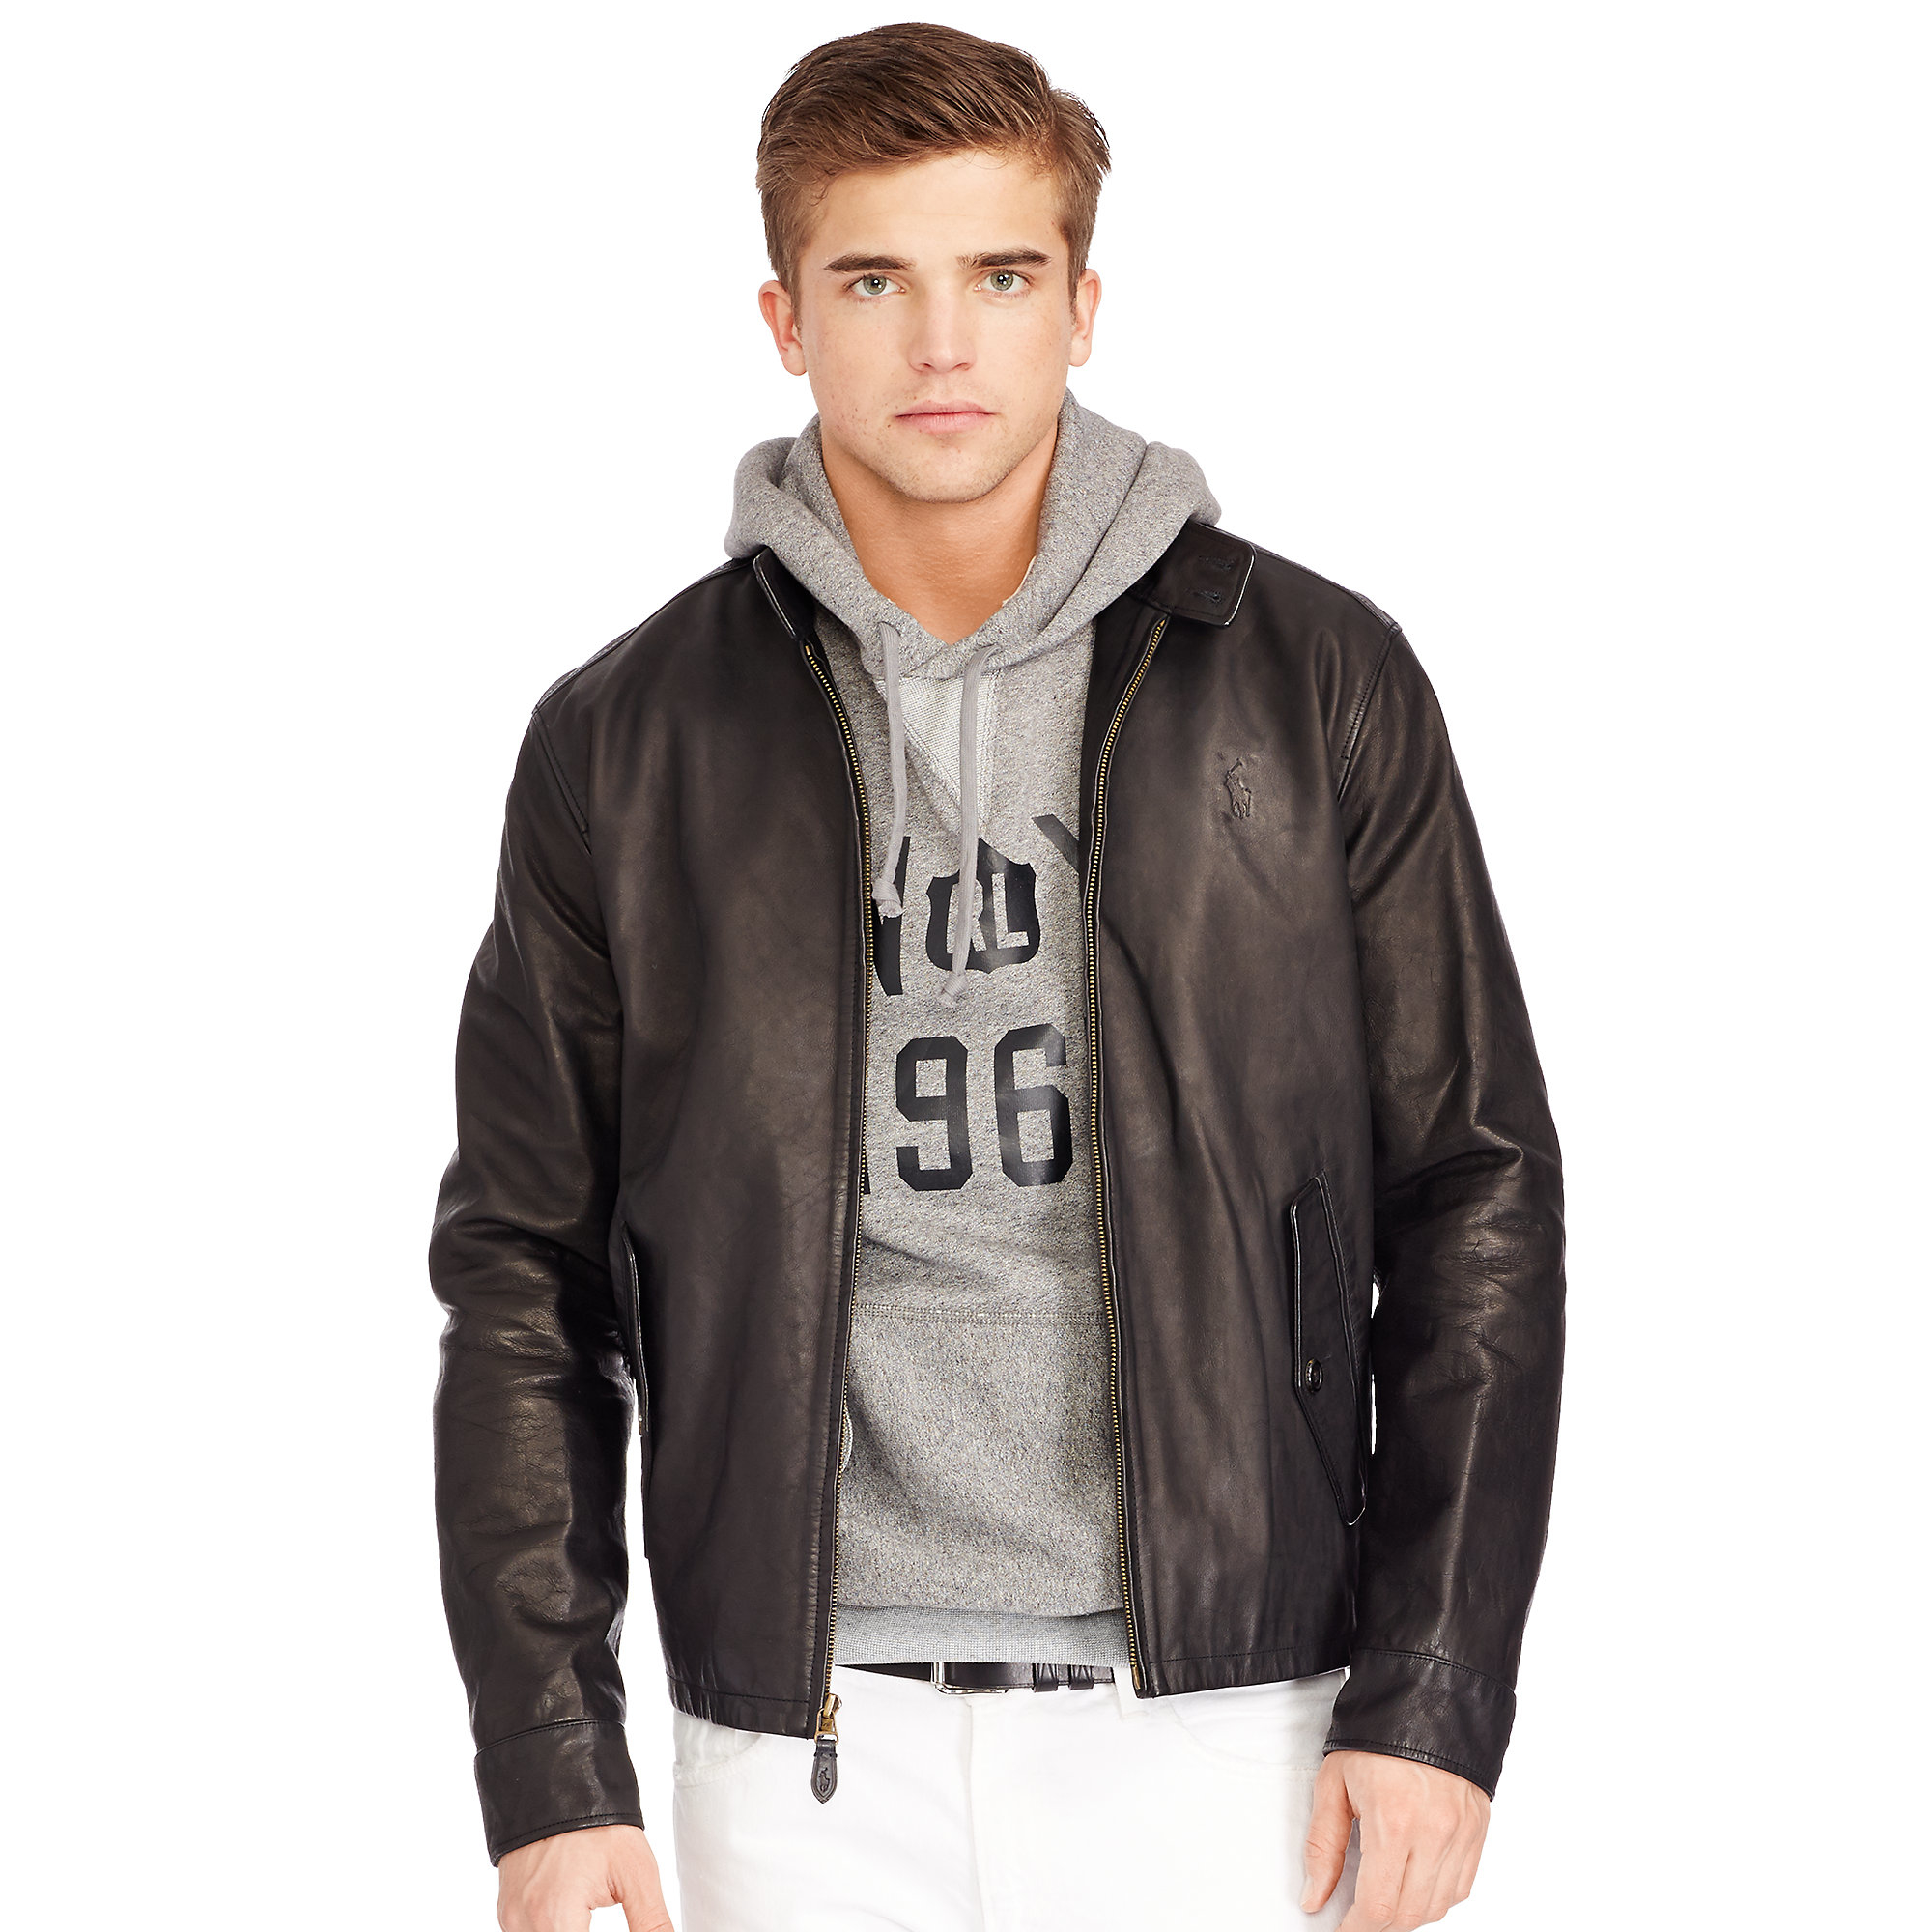 Polo Ralph Lauren Leather Full-zip Jacket in Black for Men - Lyst